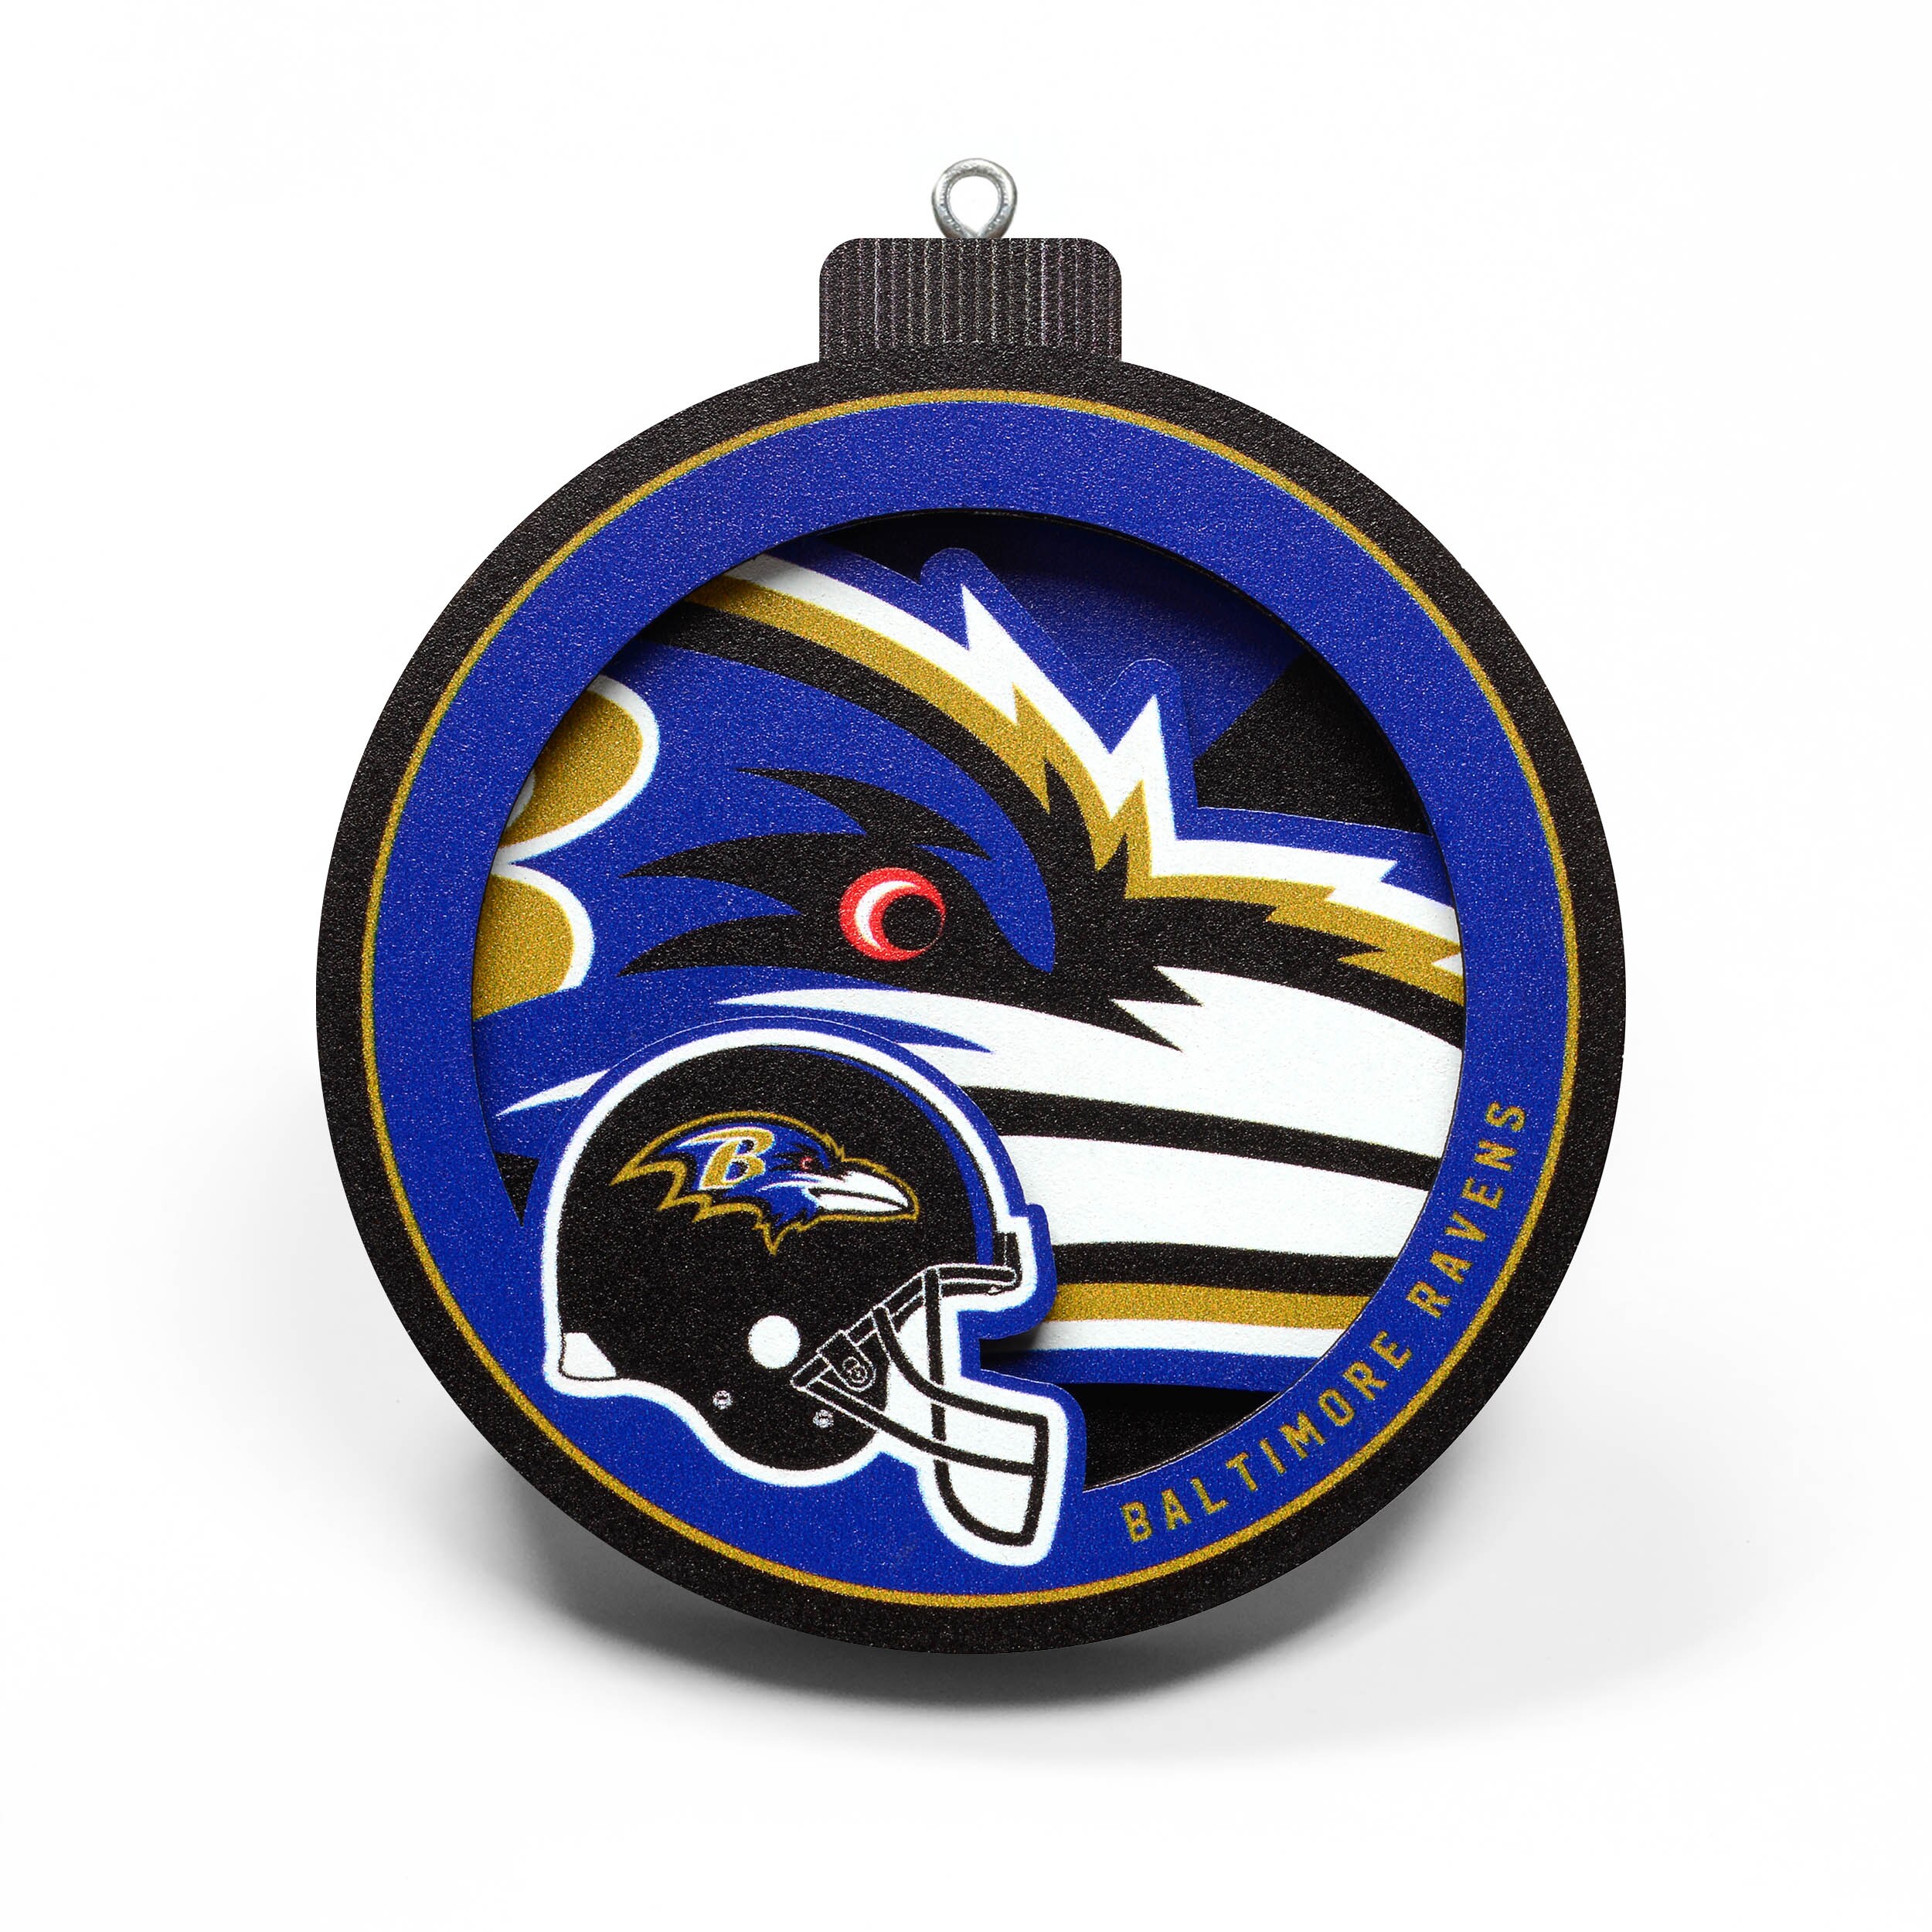 Philadelphia Eagles Patch, NFL Sports Team Logo, Size: 4.4 x 3.1 inches